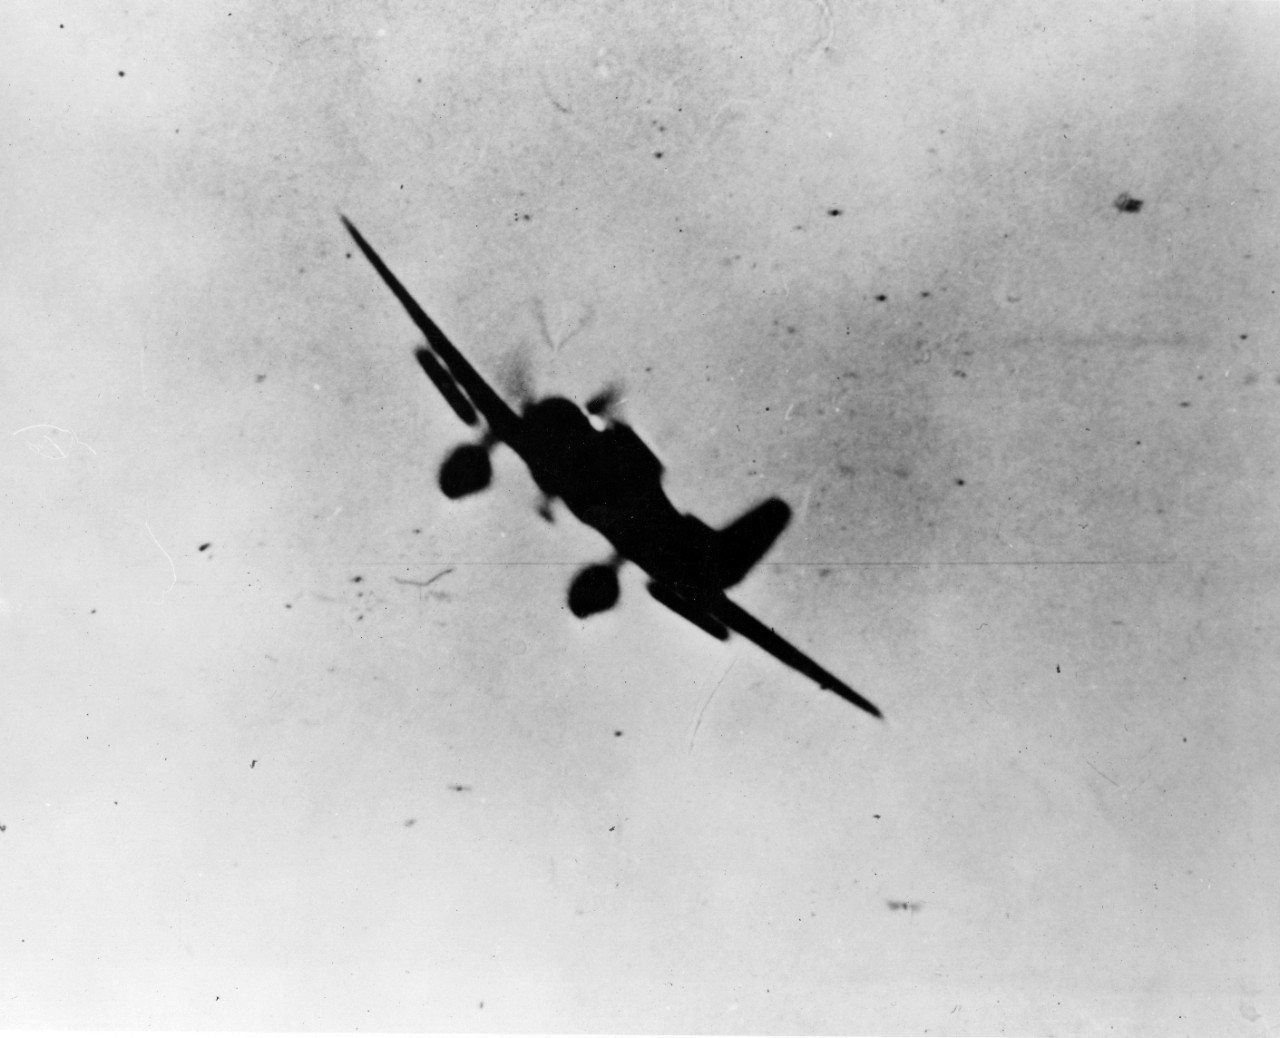 Photo #: 80-G-32908  Pearl Harbor Attack, 7 December 1941